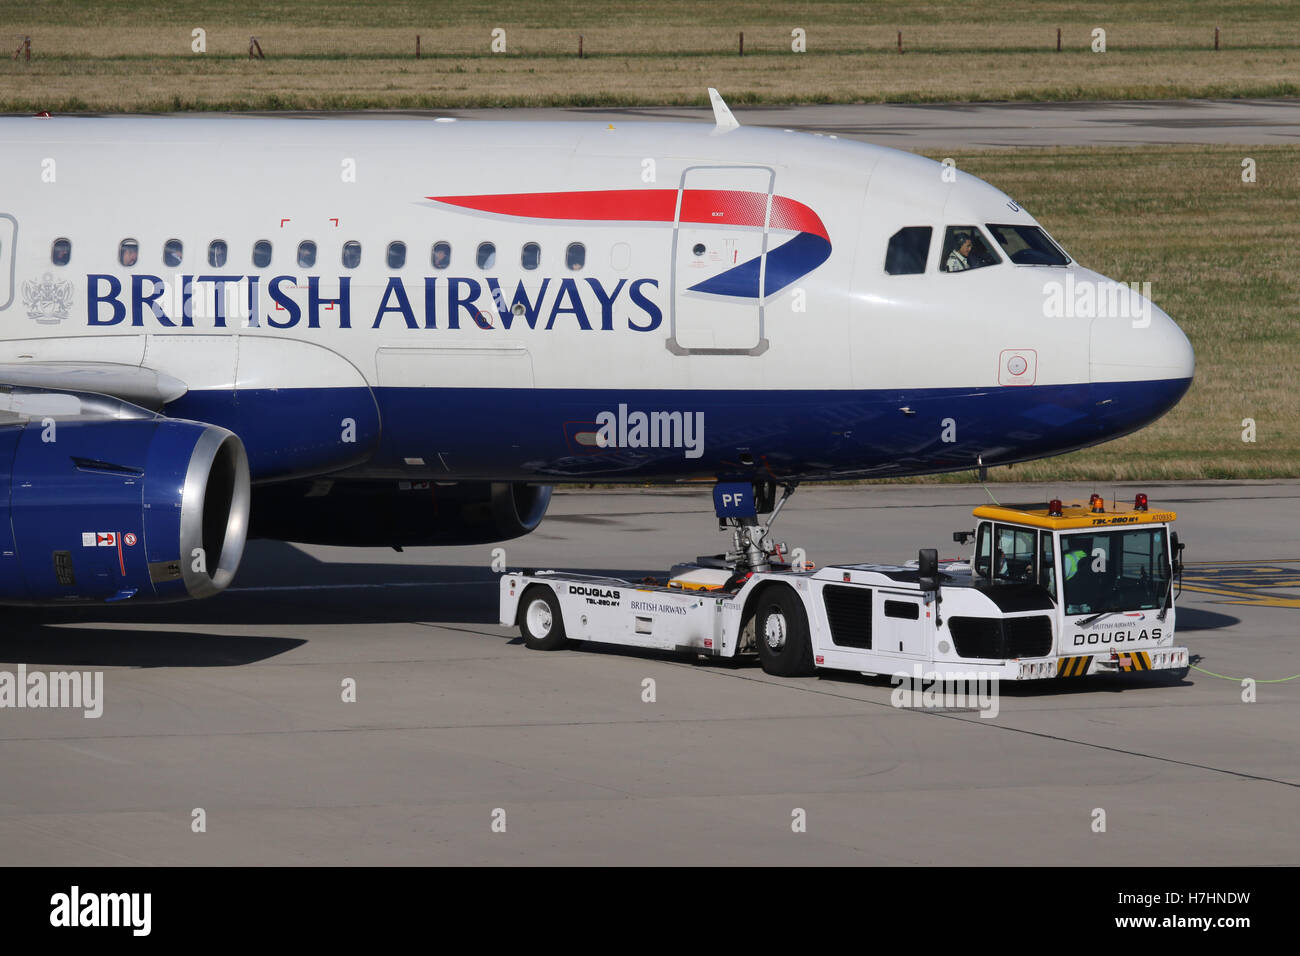 BRITISH AIRWAYS PUSHBACK PUSH BACK Stockfoto